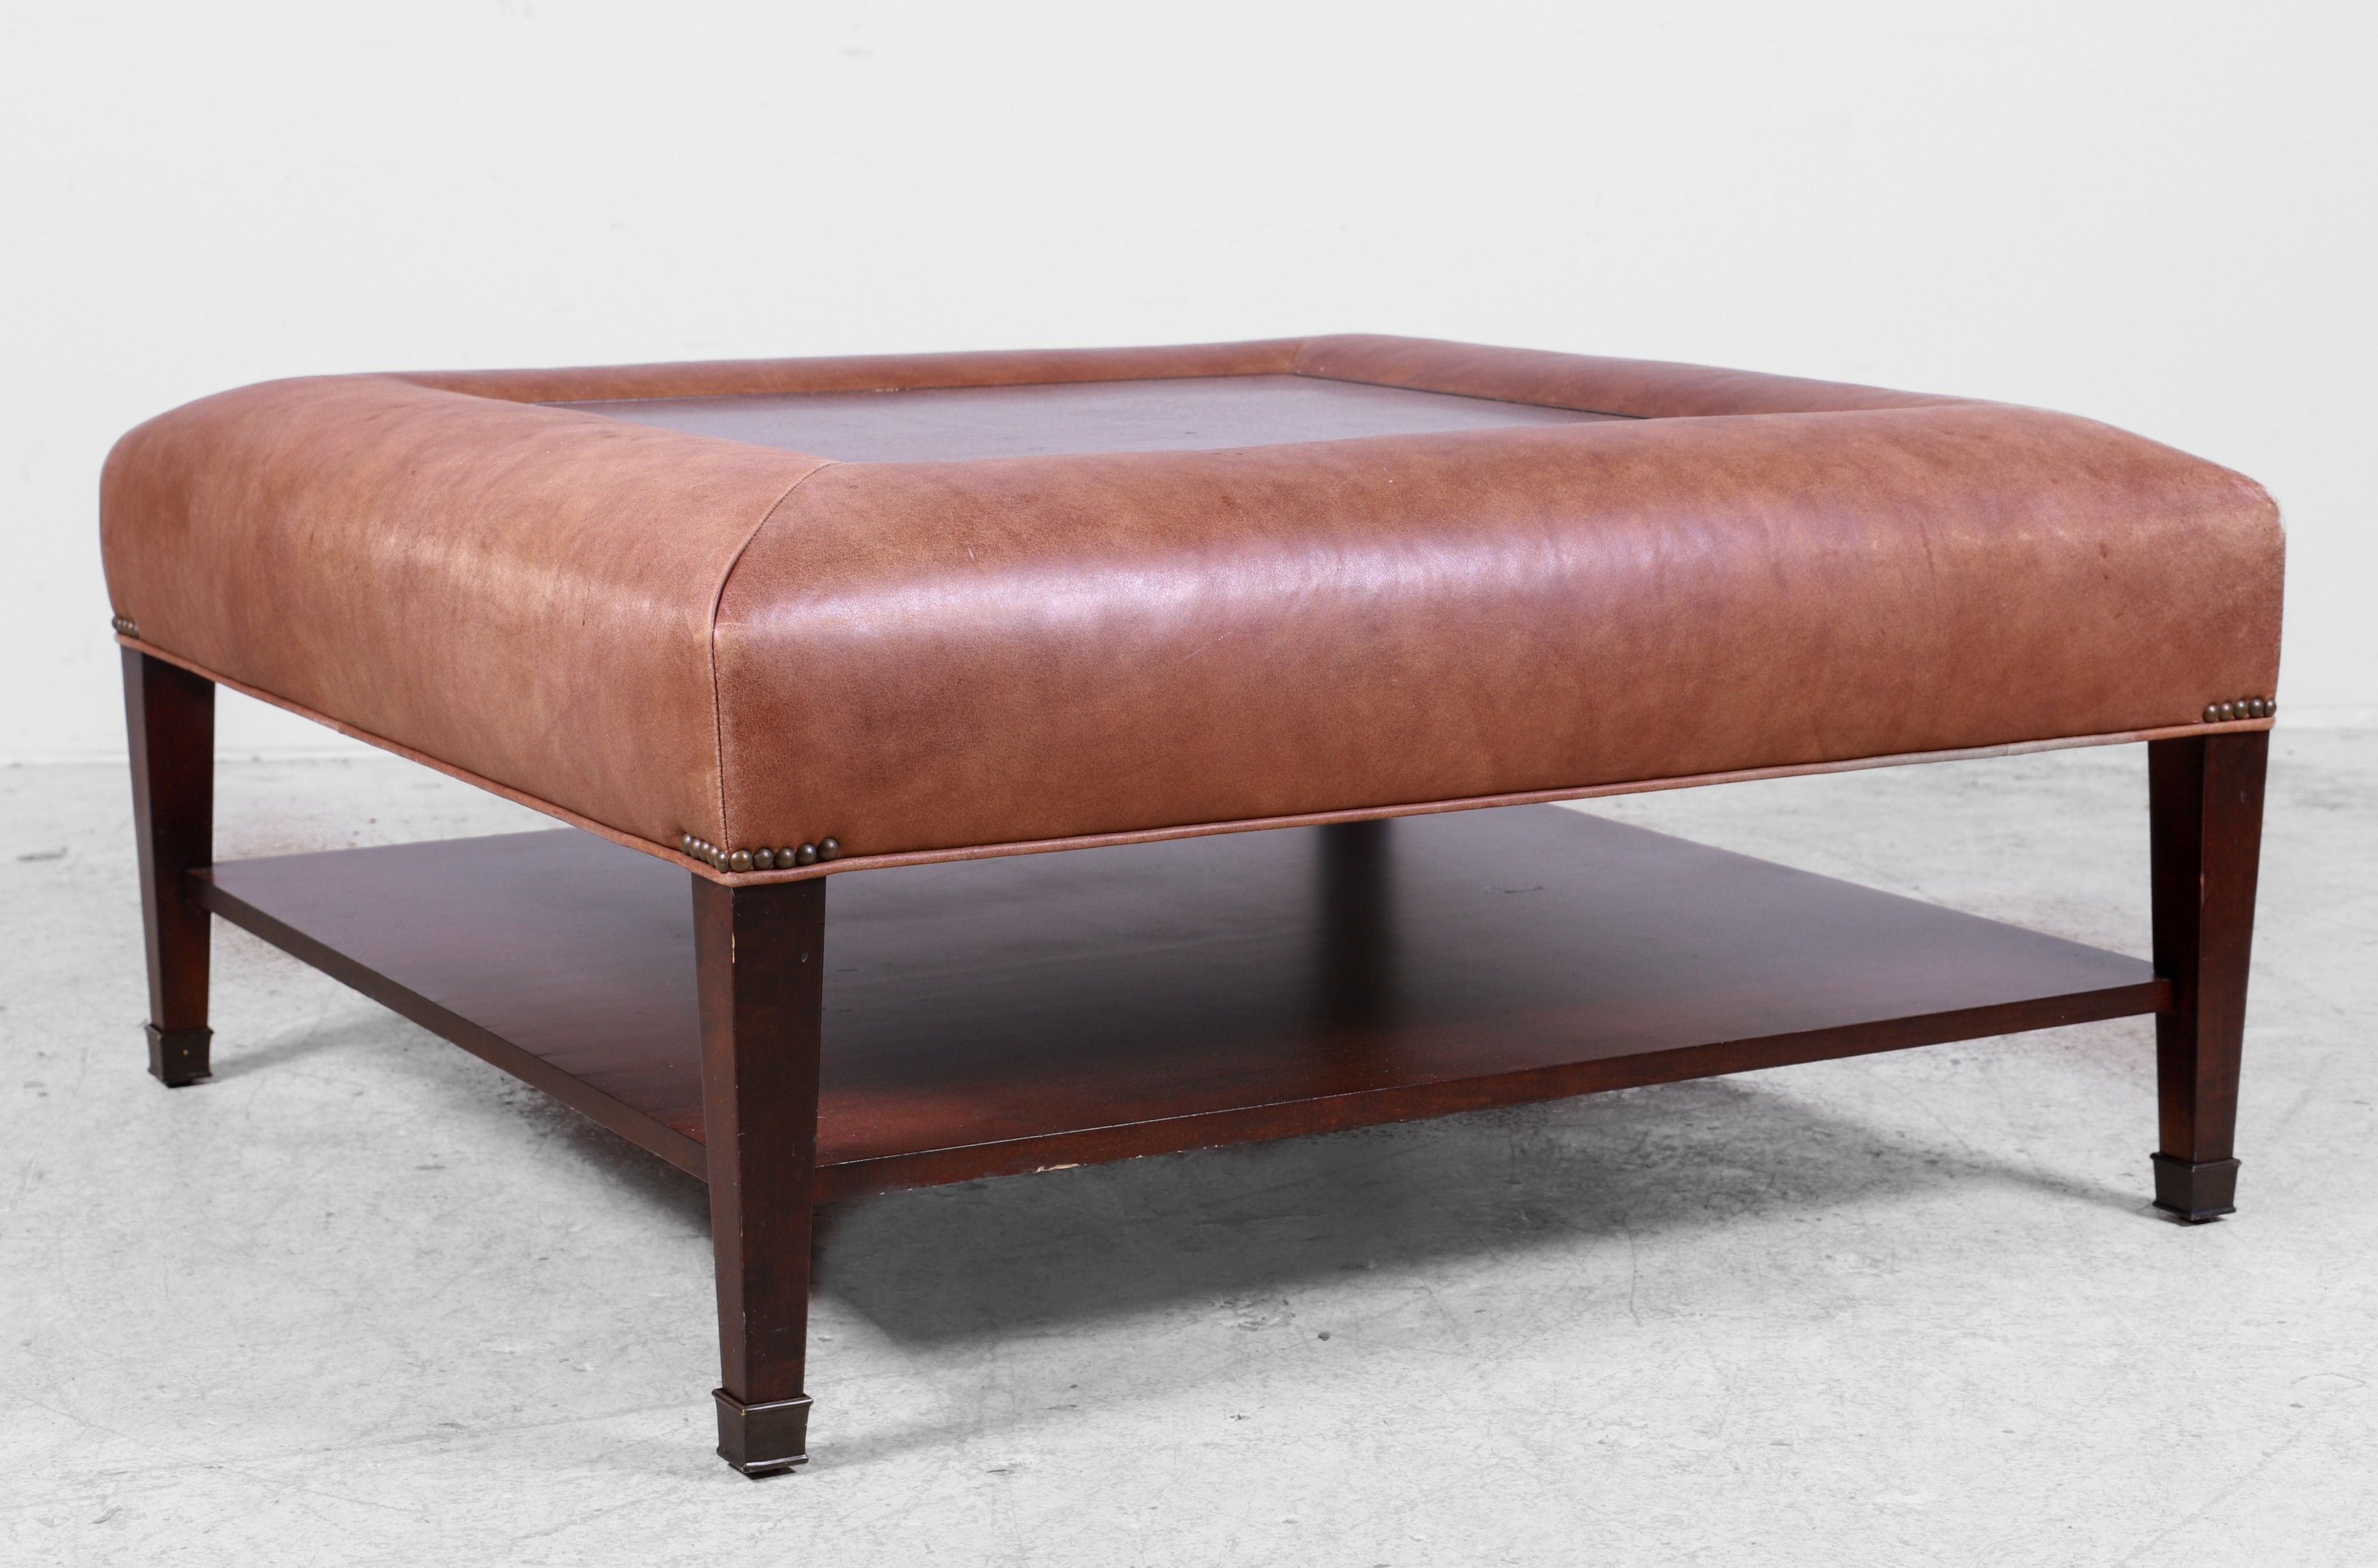 Contemporary leather and mahogany